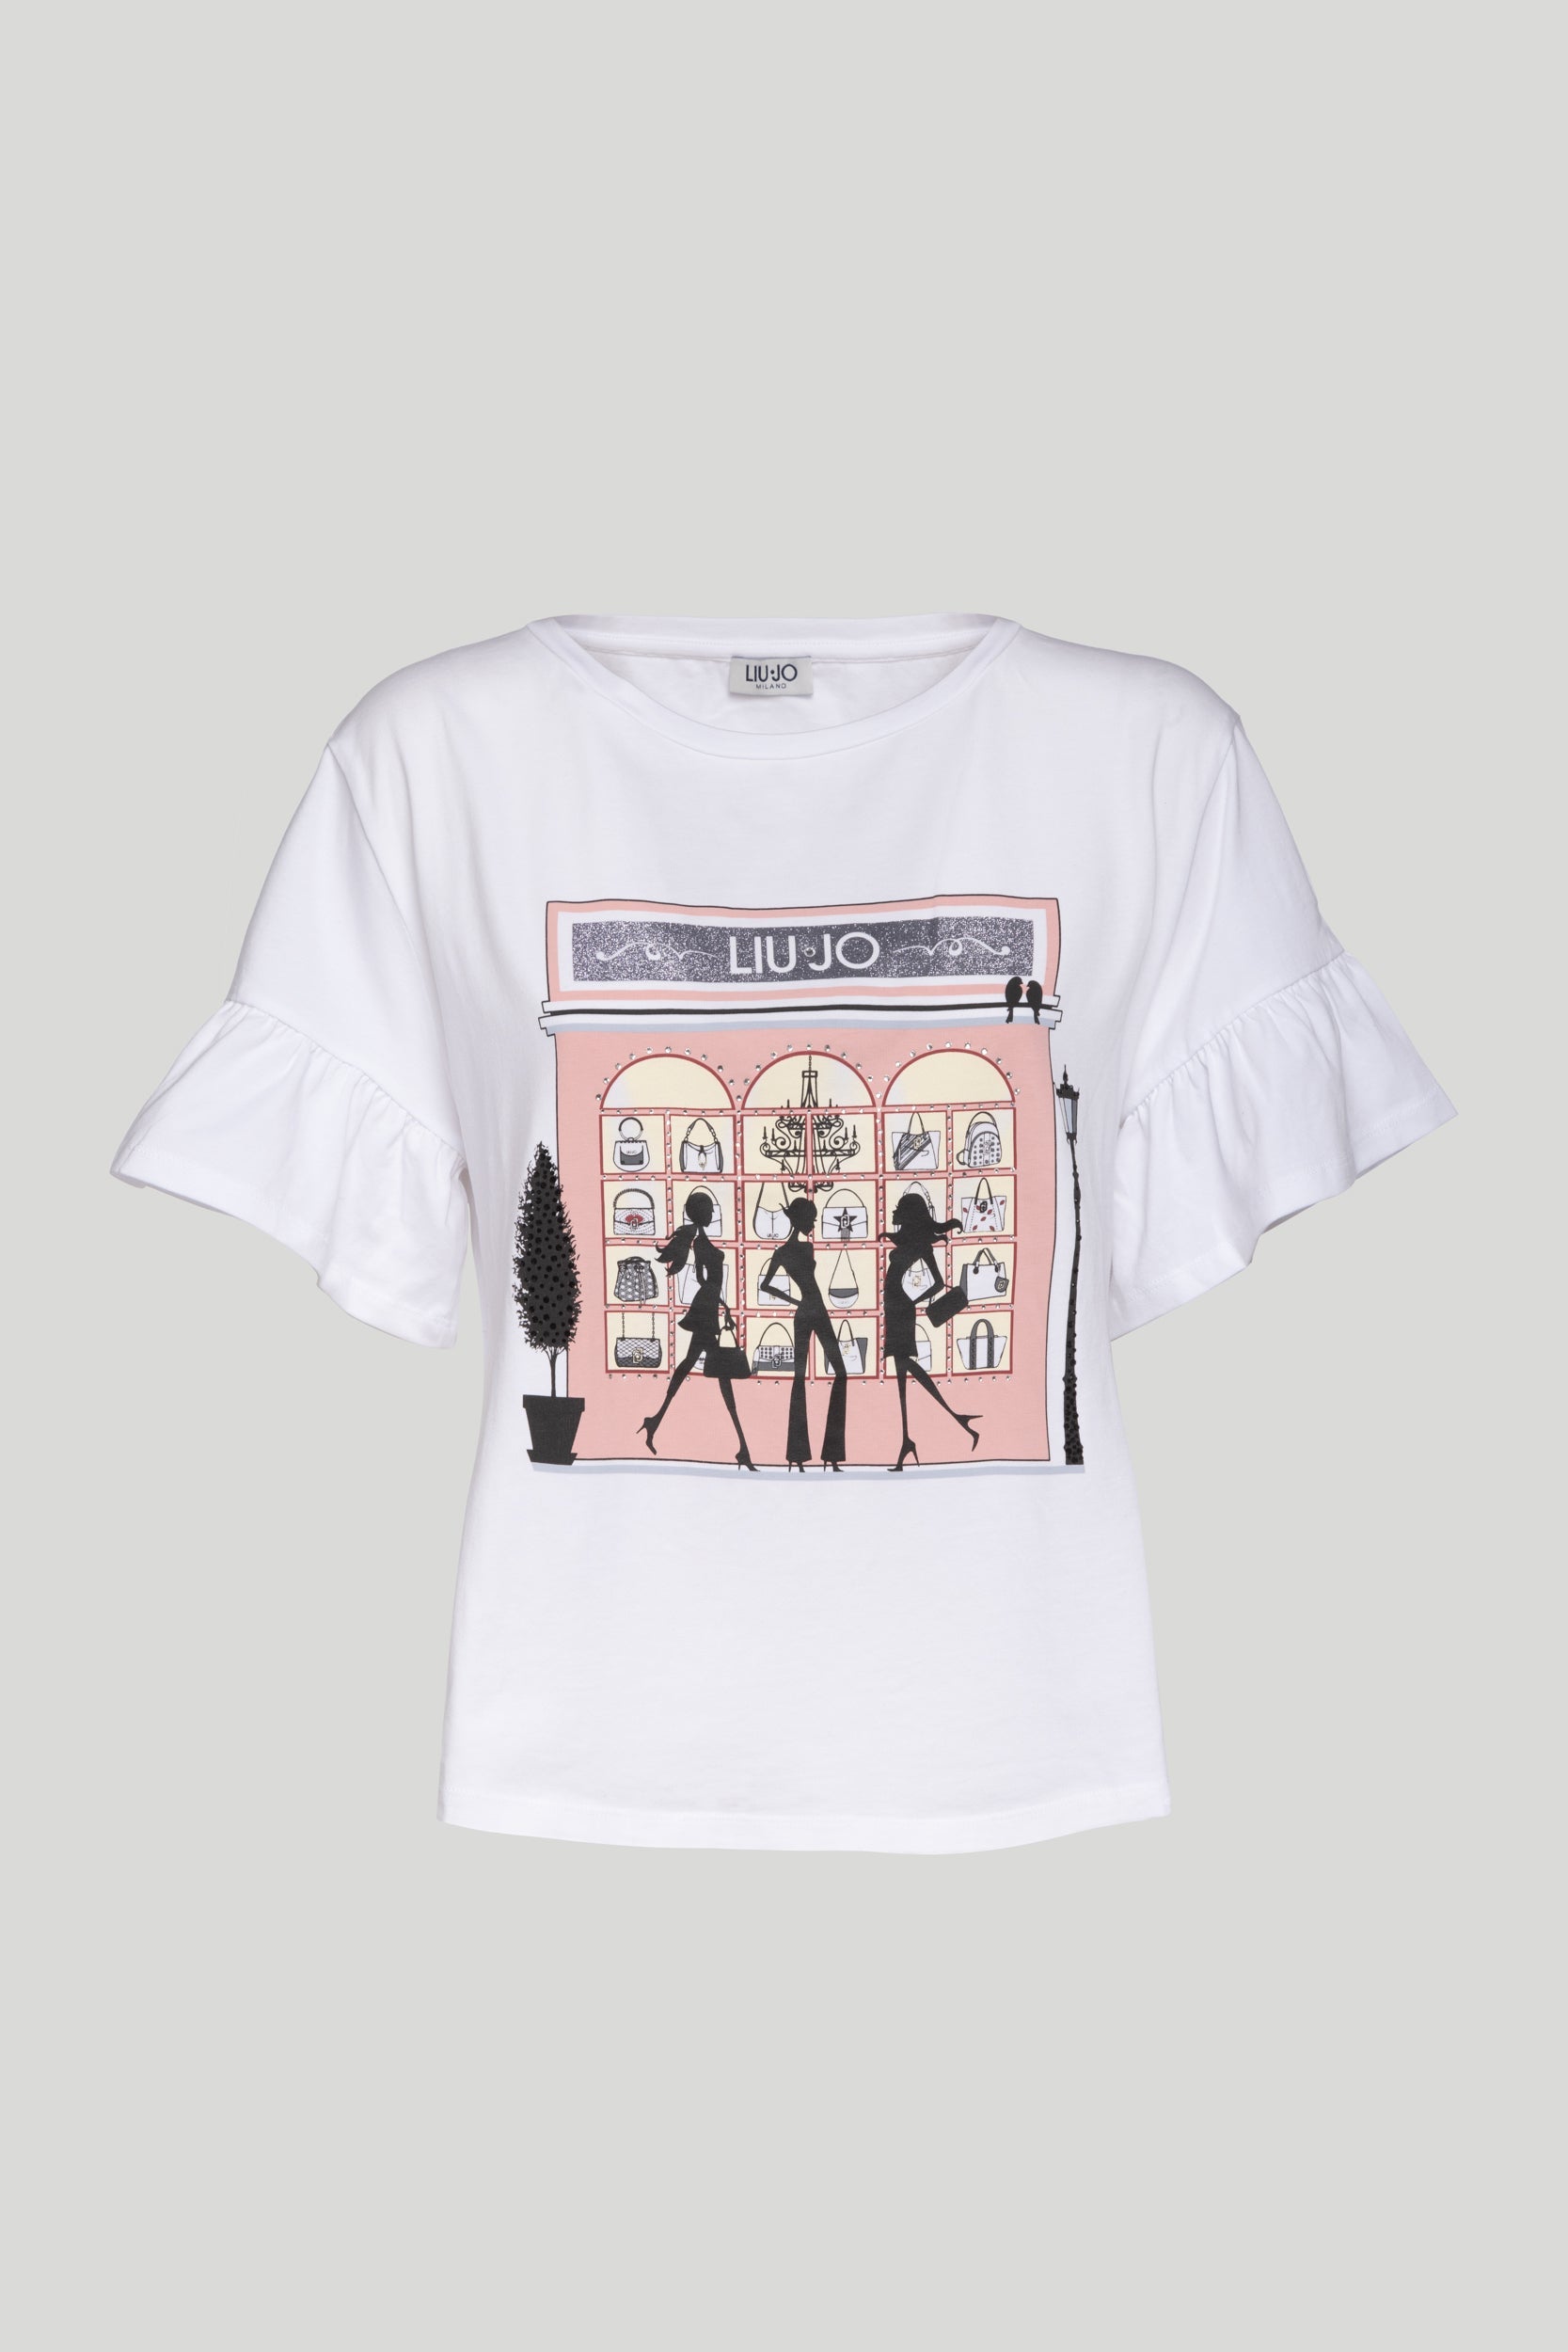 LIU-JO T-Shirt Bianca Einkaufen